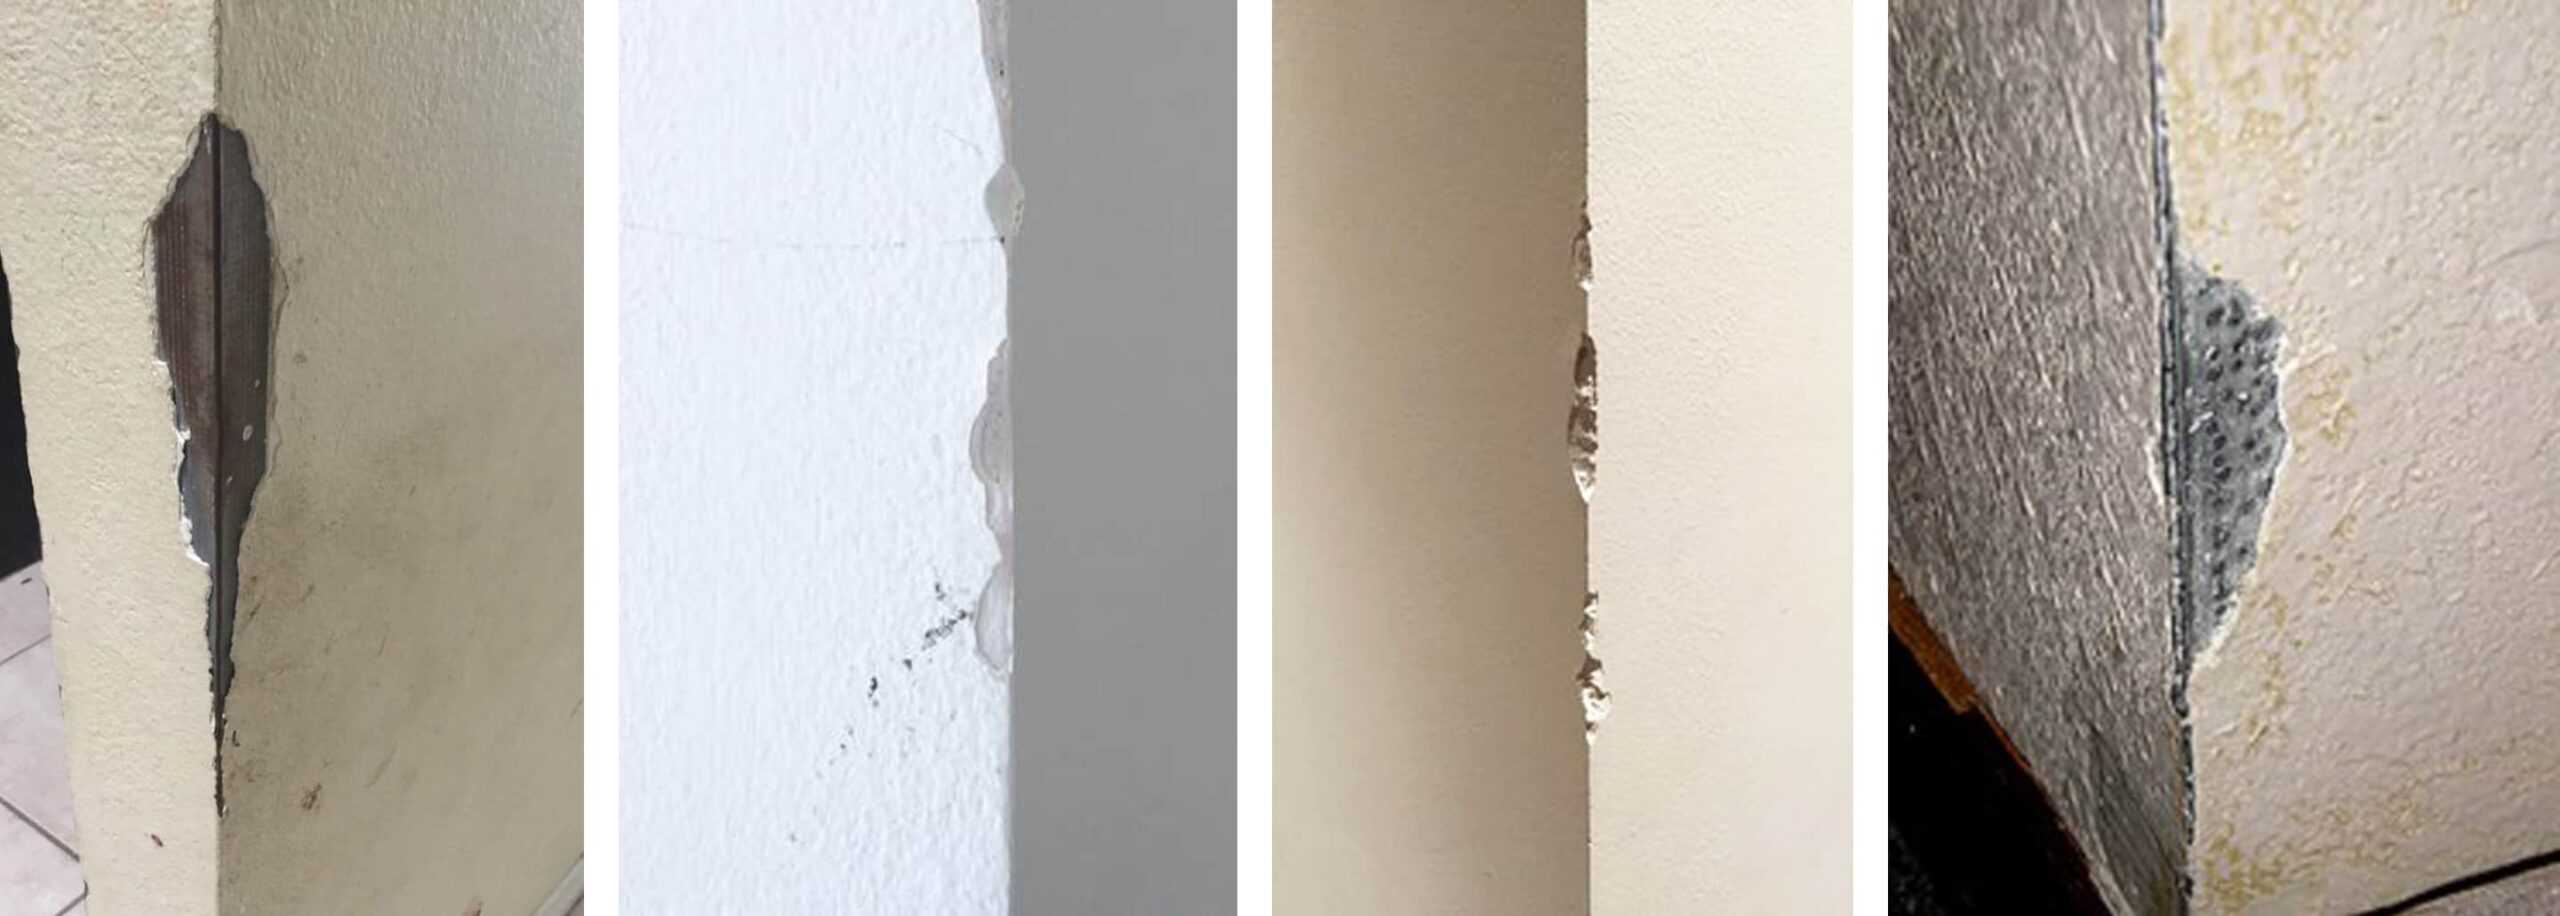 damaged wall corners collage